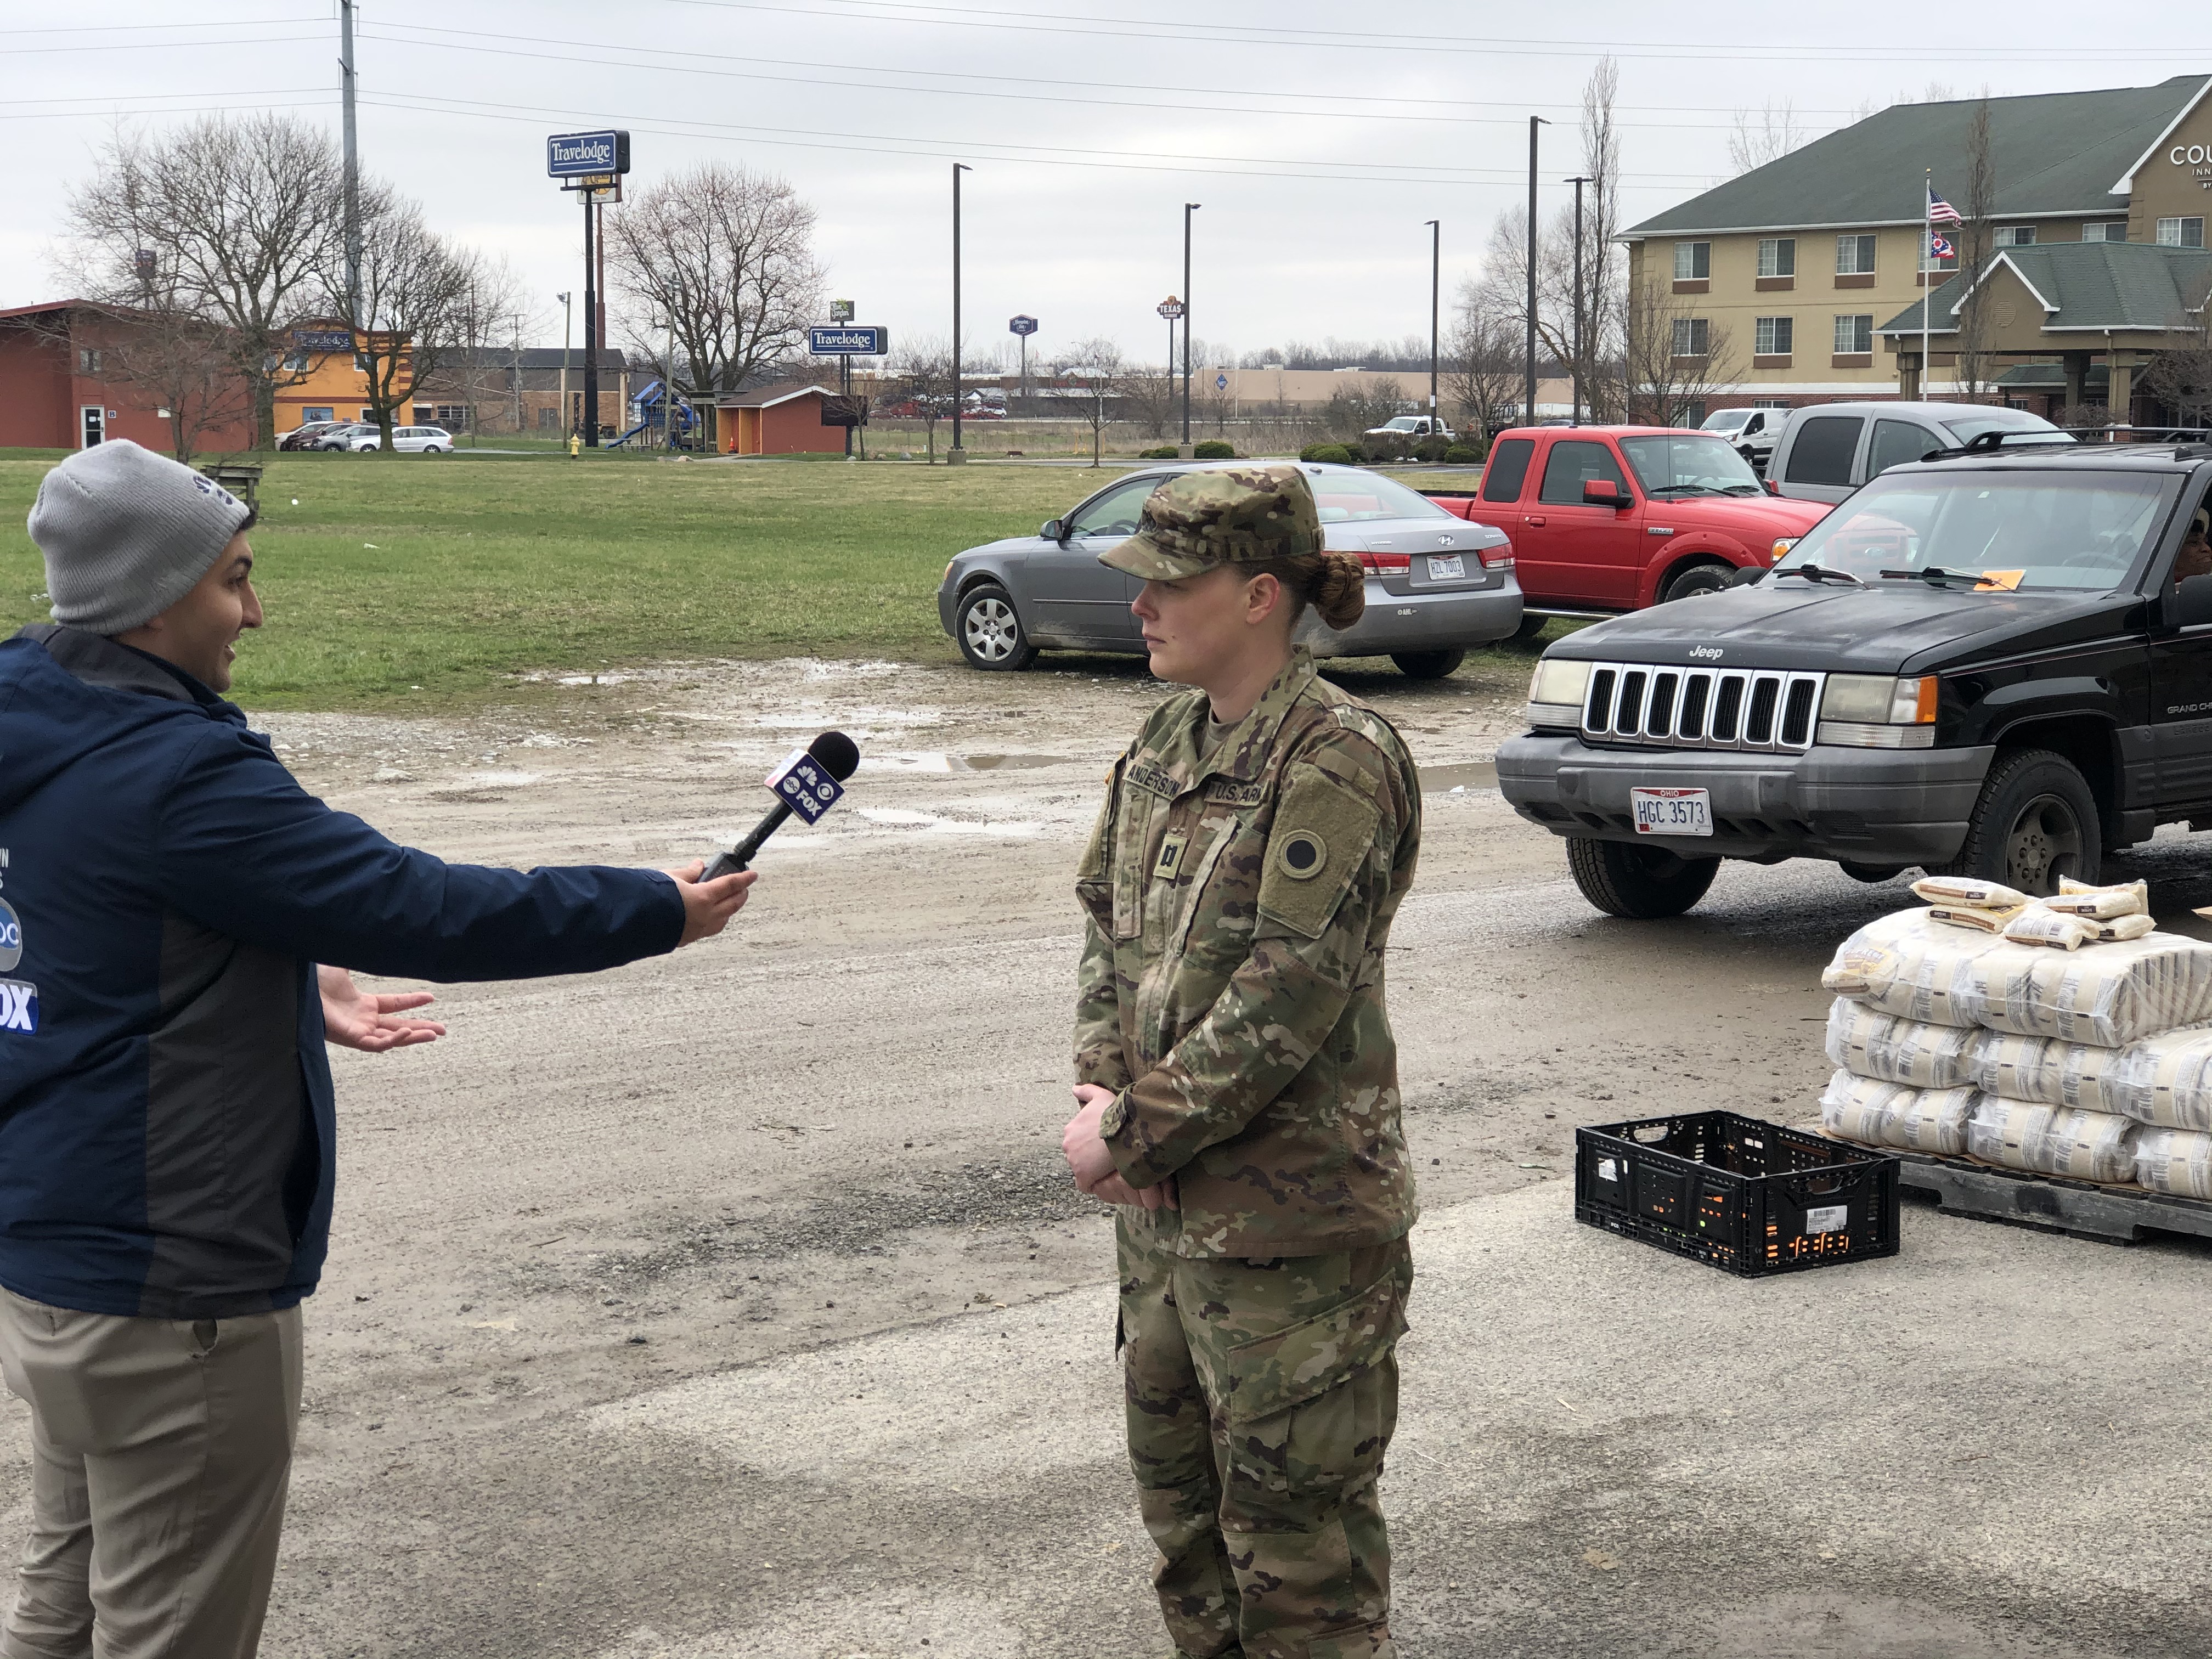 Soldier interviewed in parking lot.